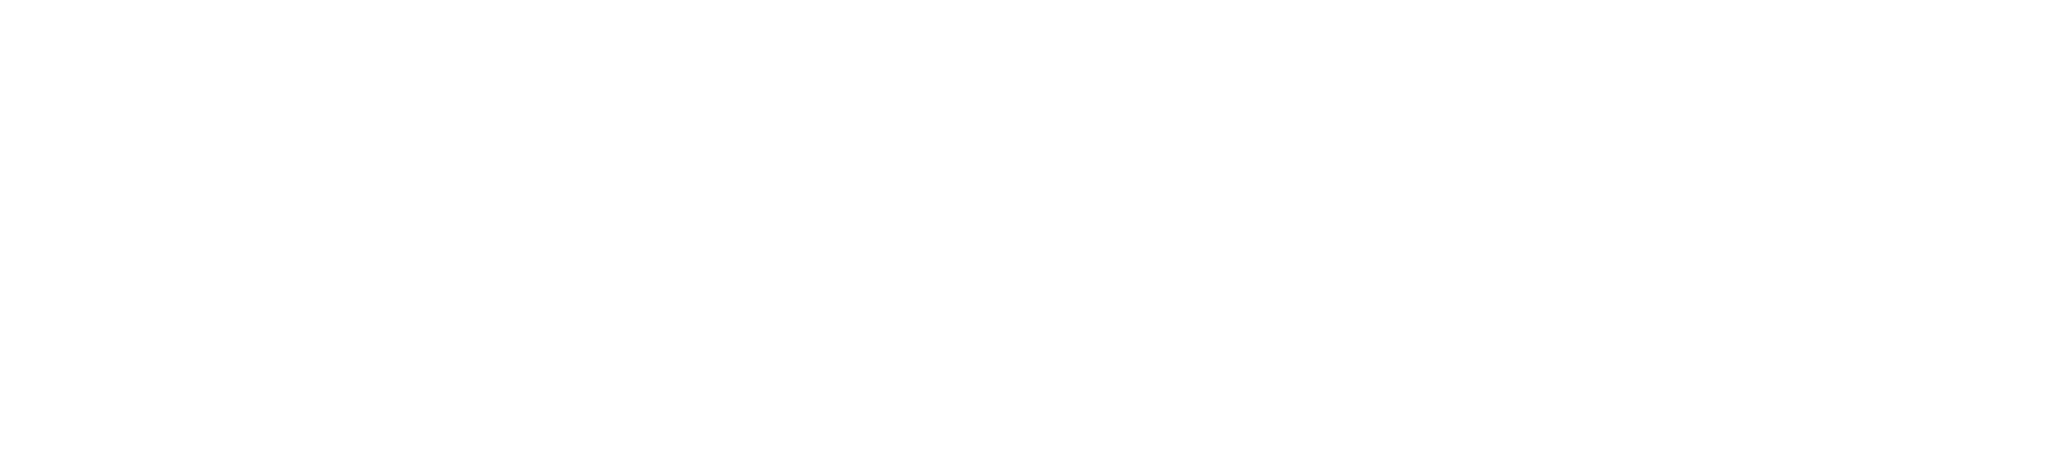 tracemeal-logo